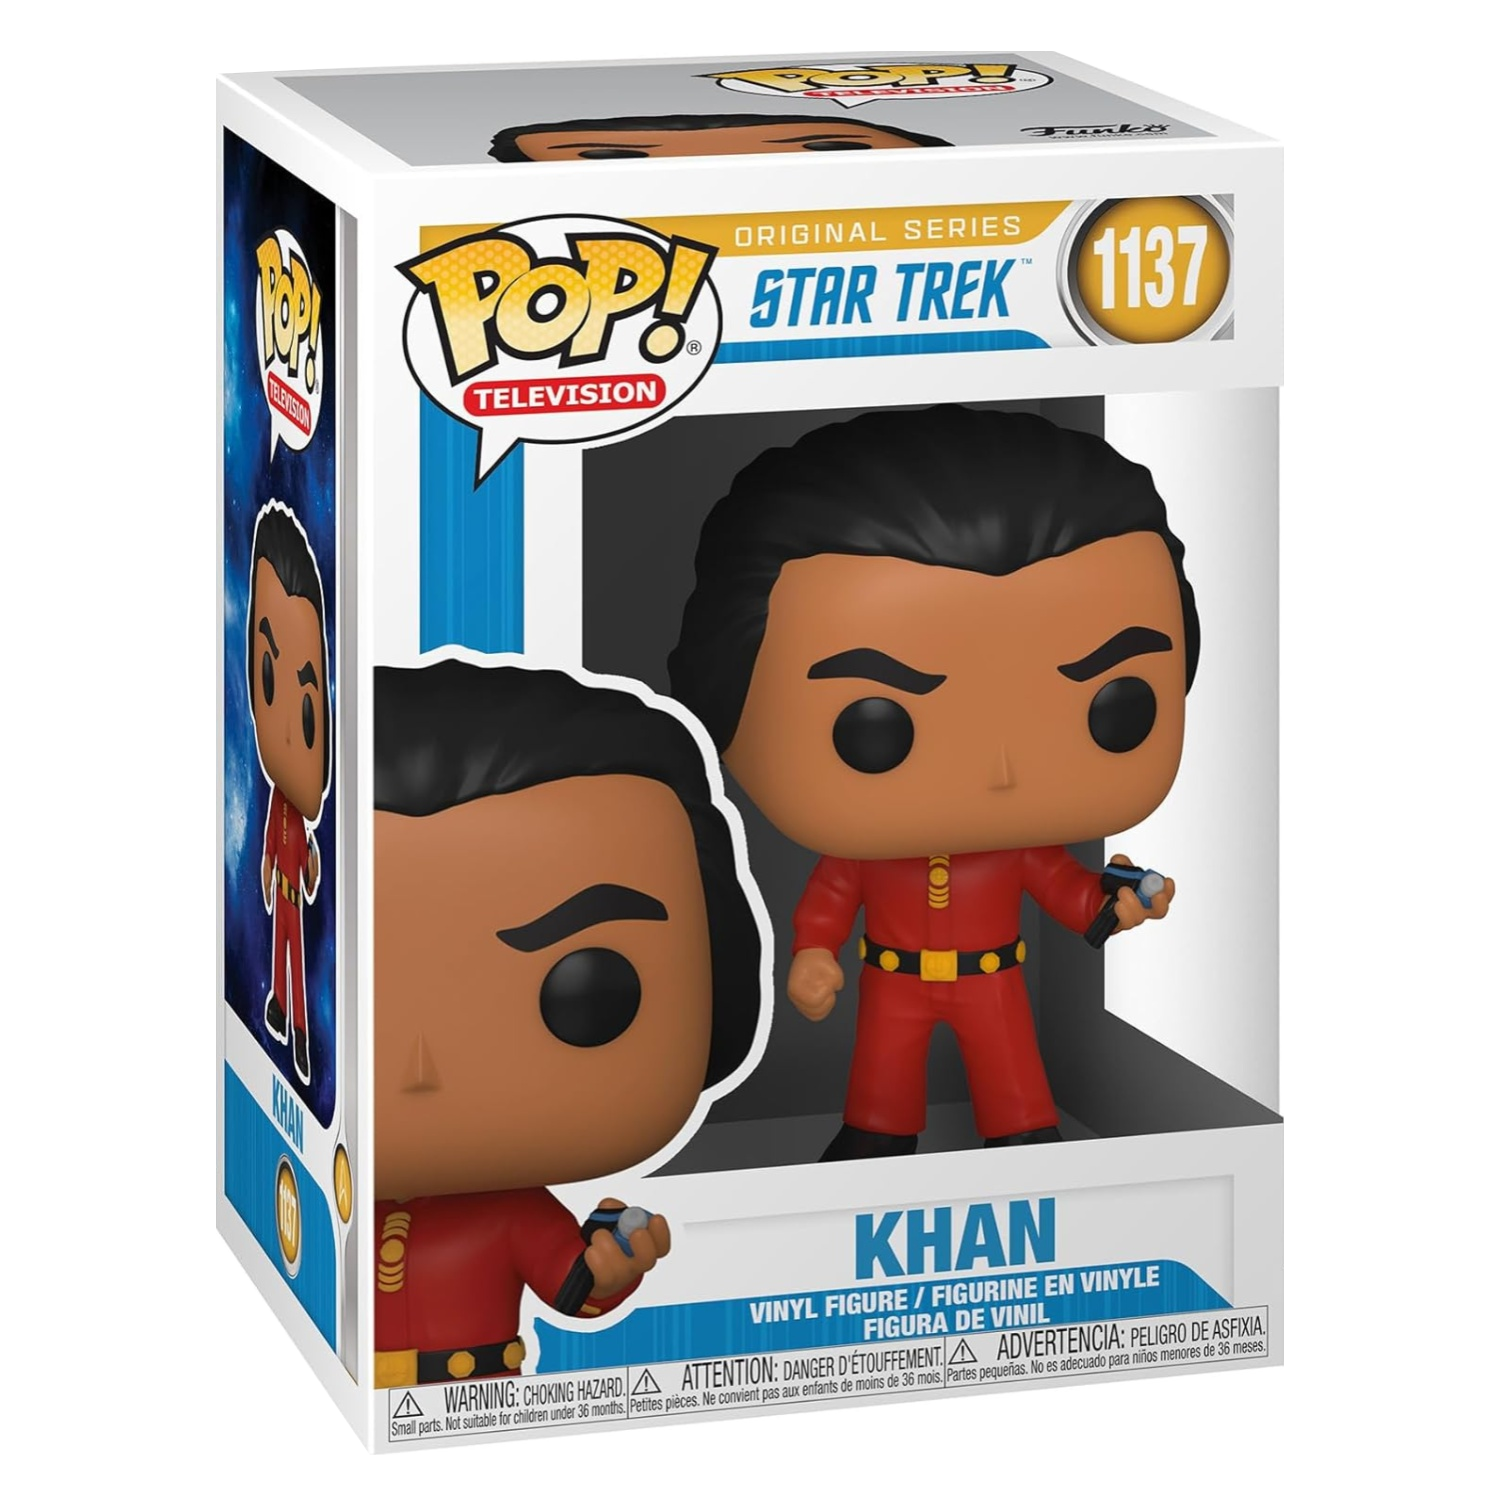 Figura de Khan de Star Trek de Funko POP